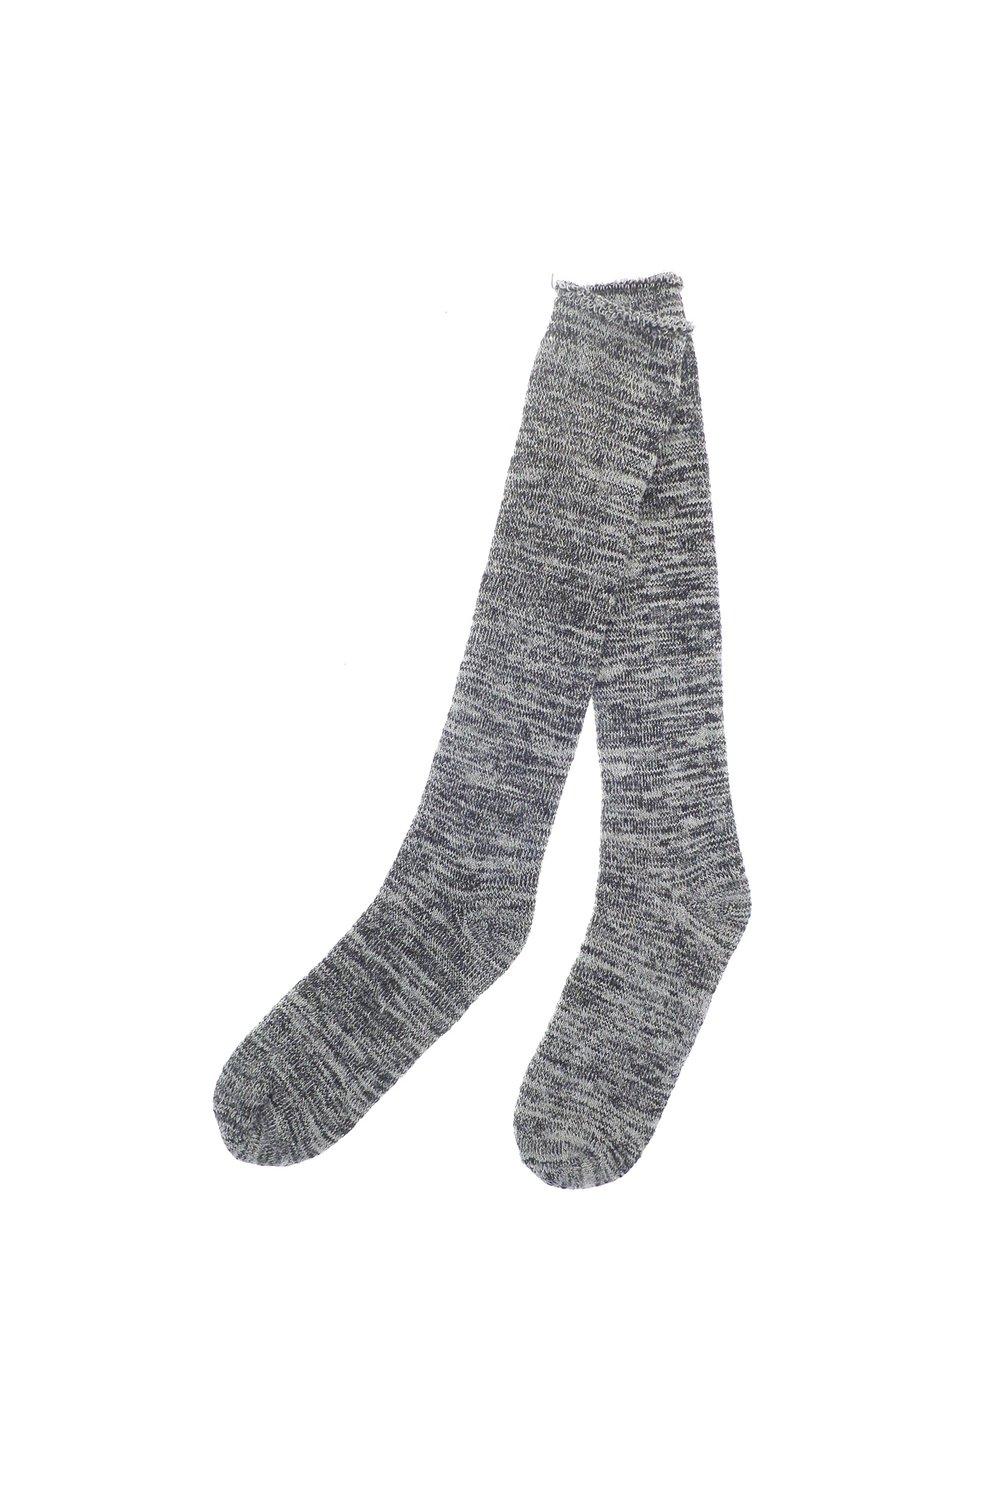 Homeknit Wellington Boot Socks Men's Grey